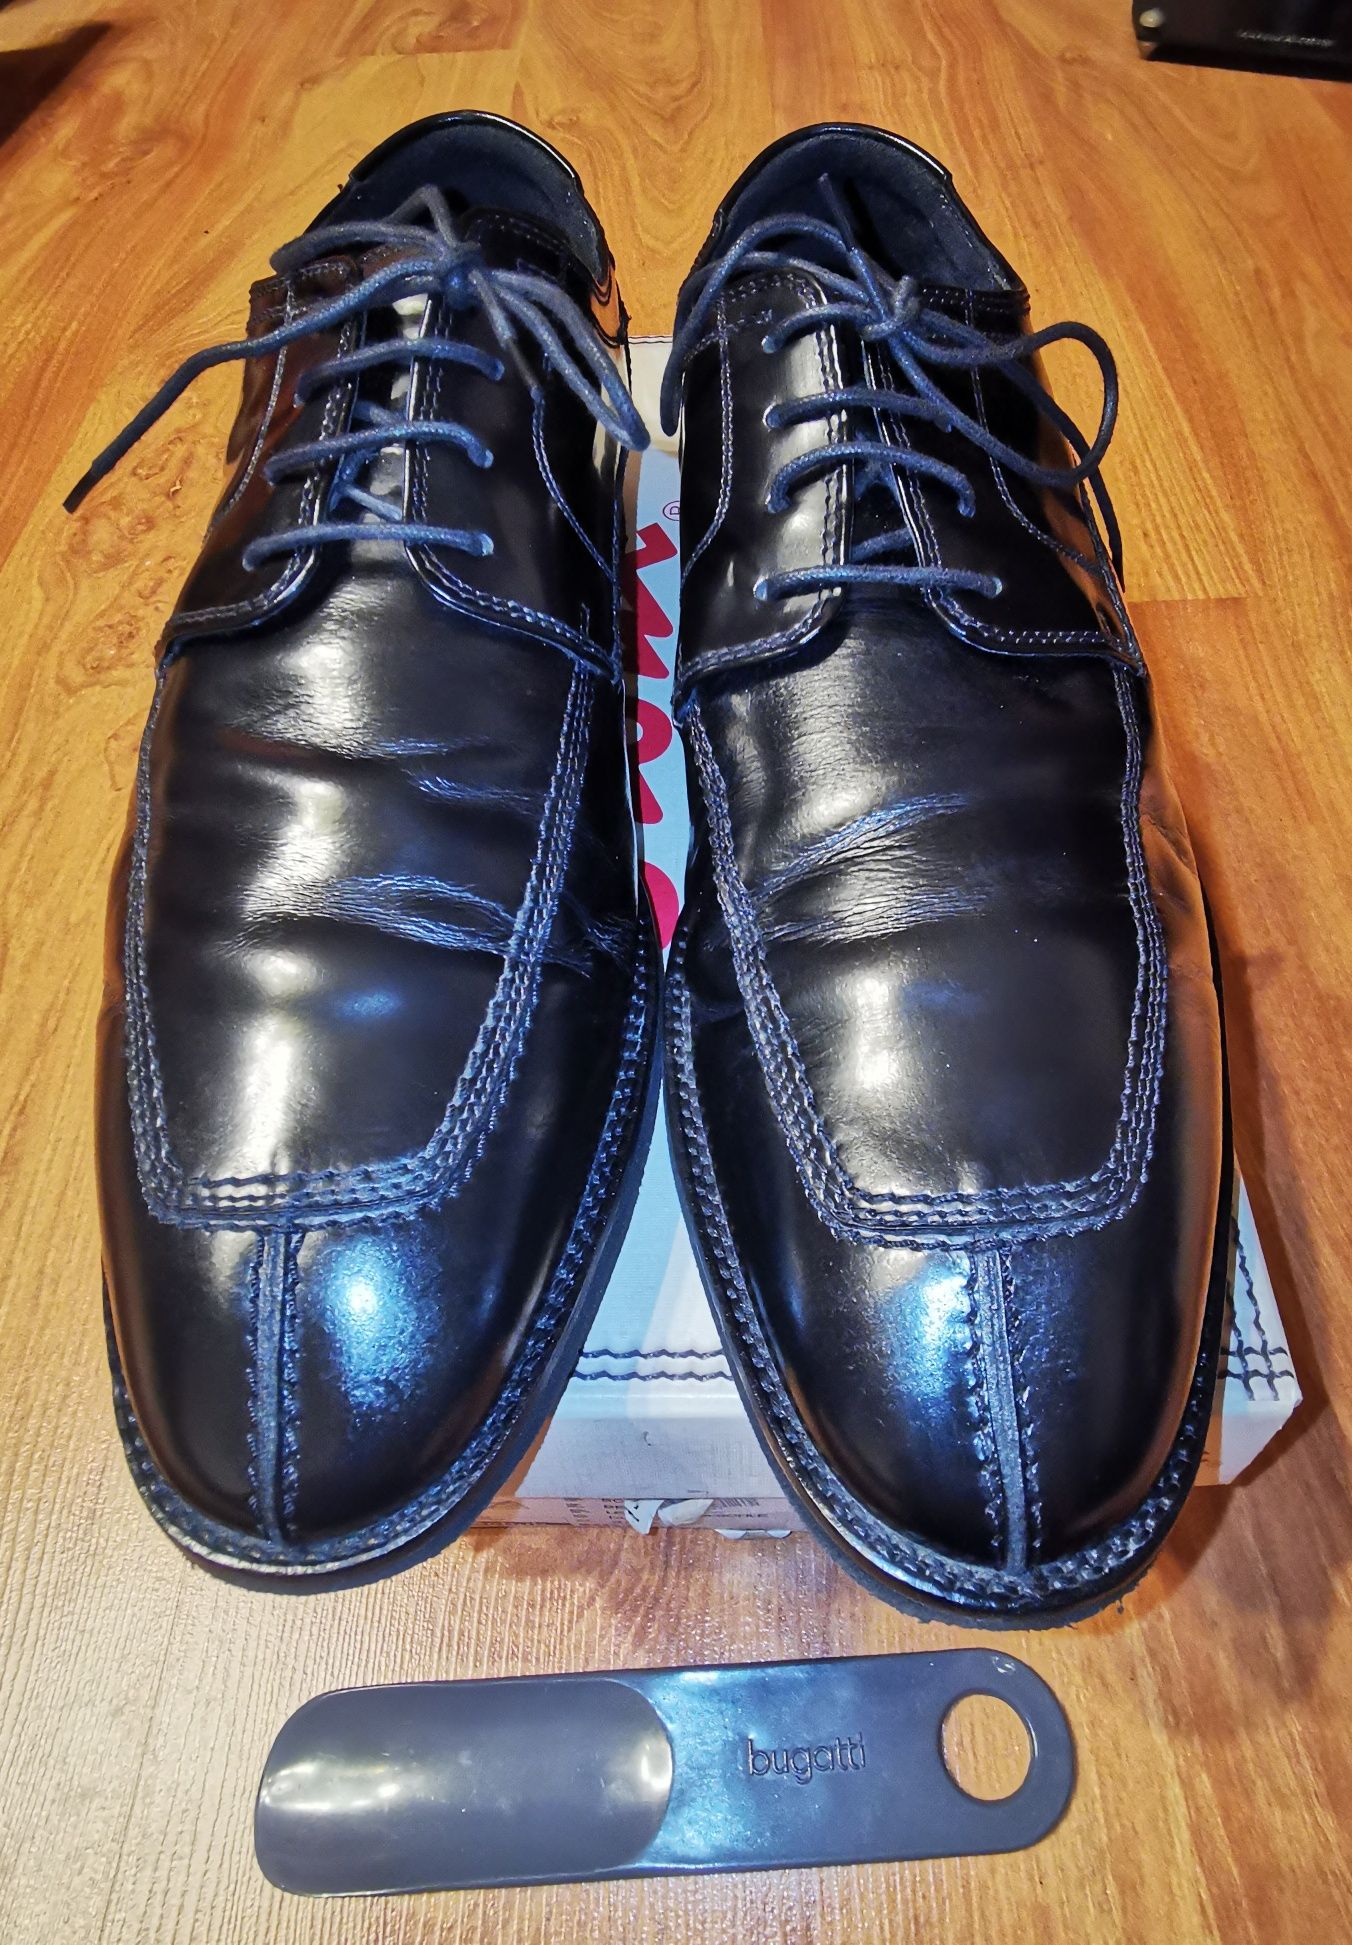 Pantofi formali Sioux Diogo, piele naturala, in bune conditii, mar. 44